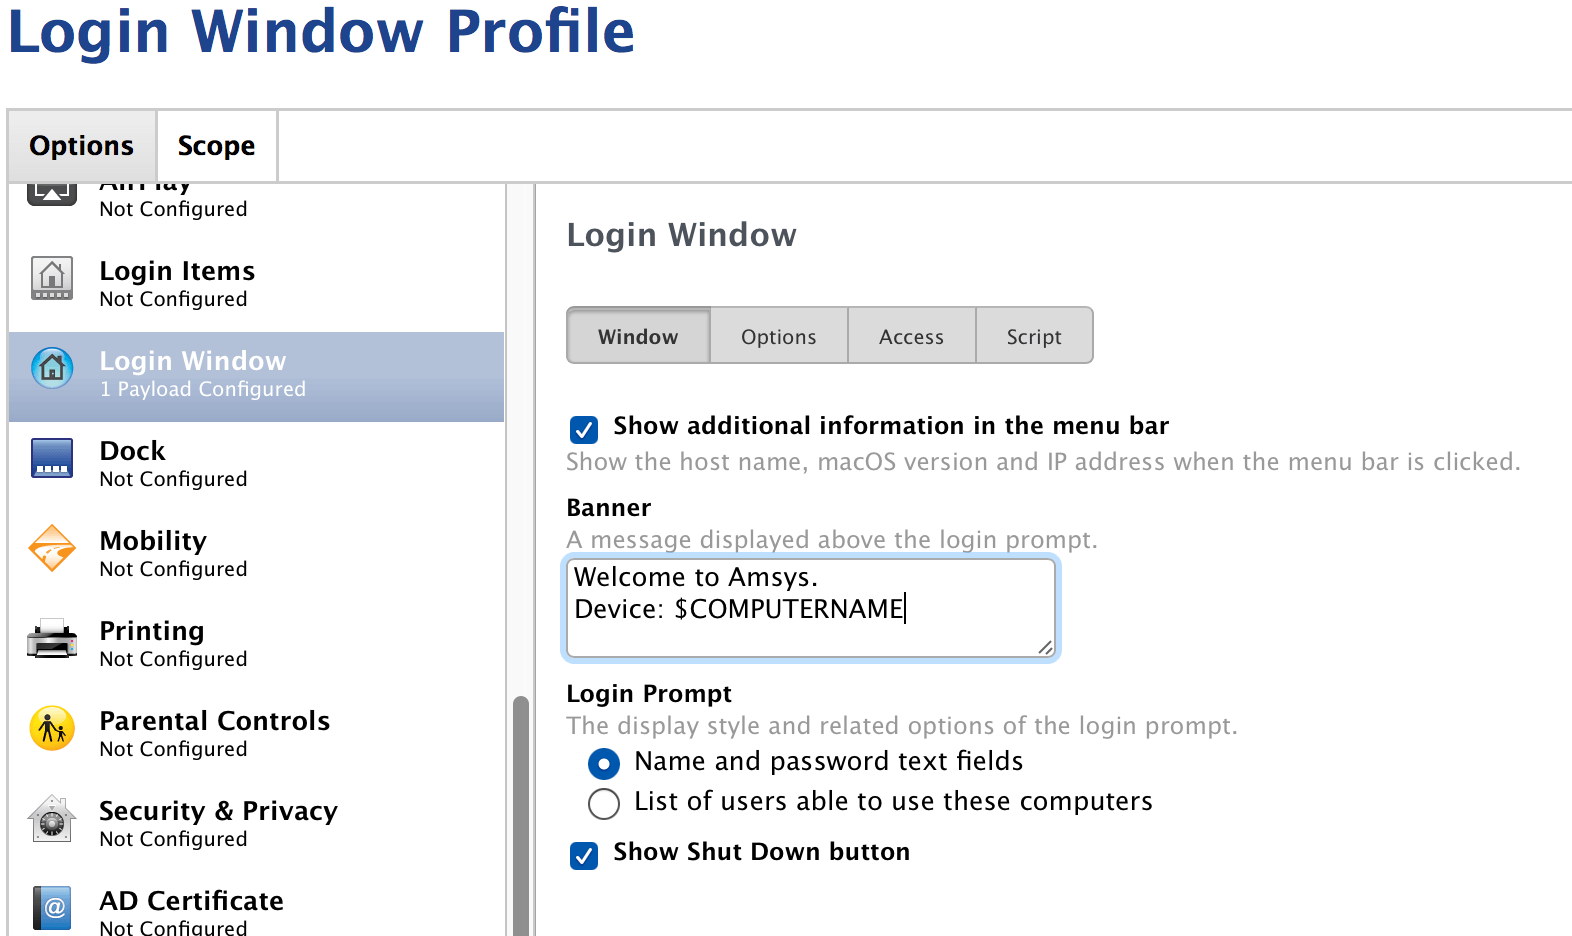 MDM configuration profiles